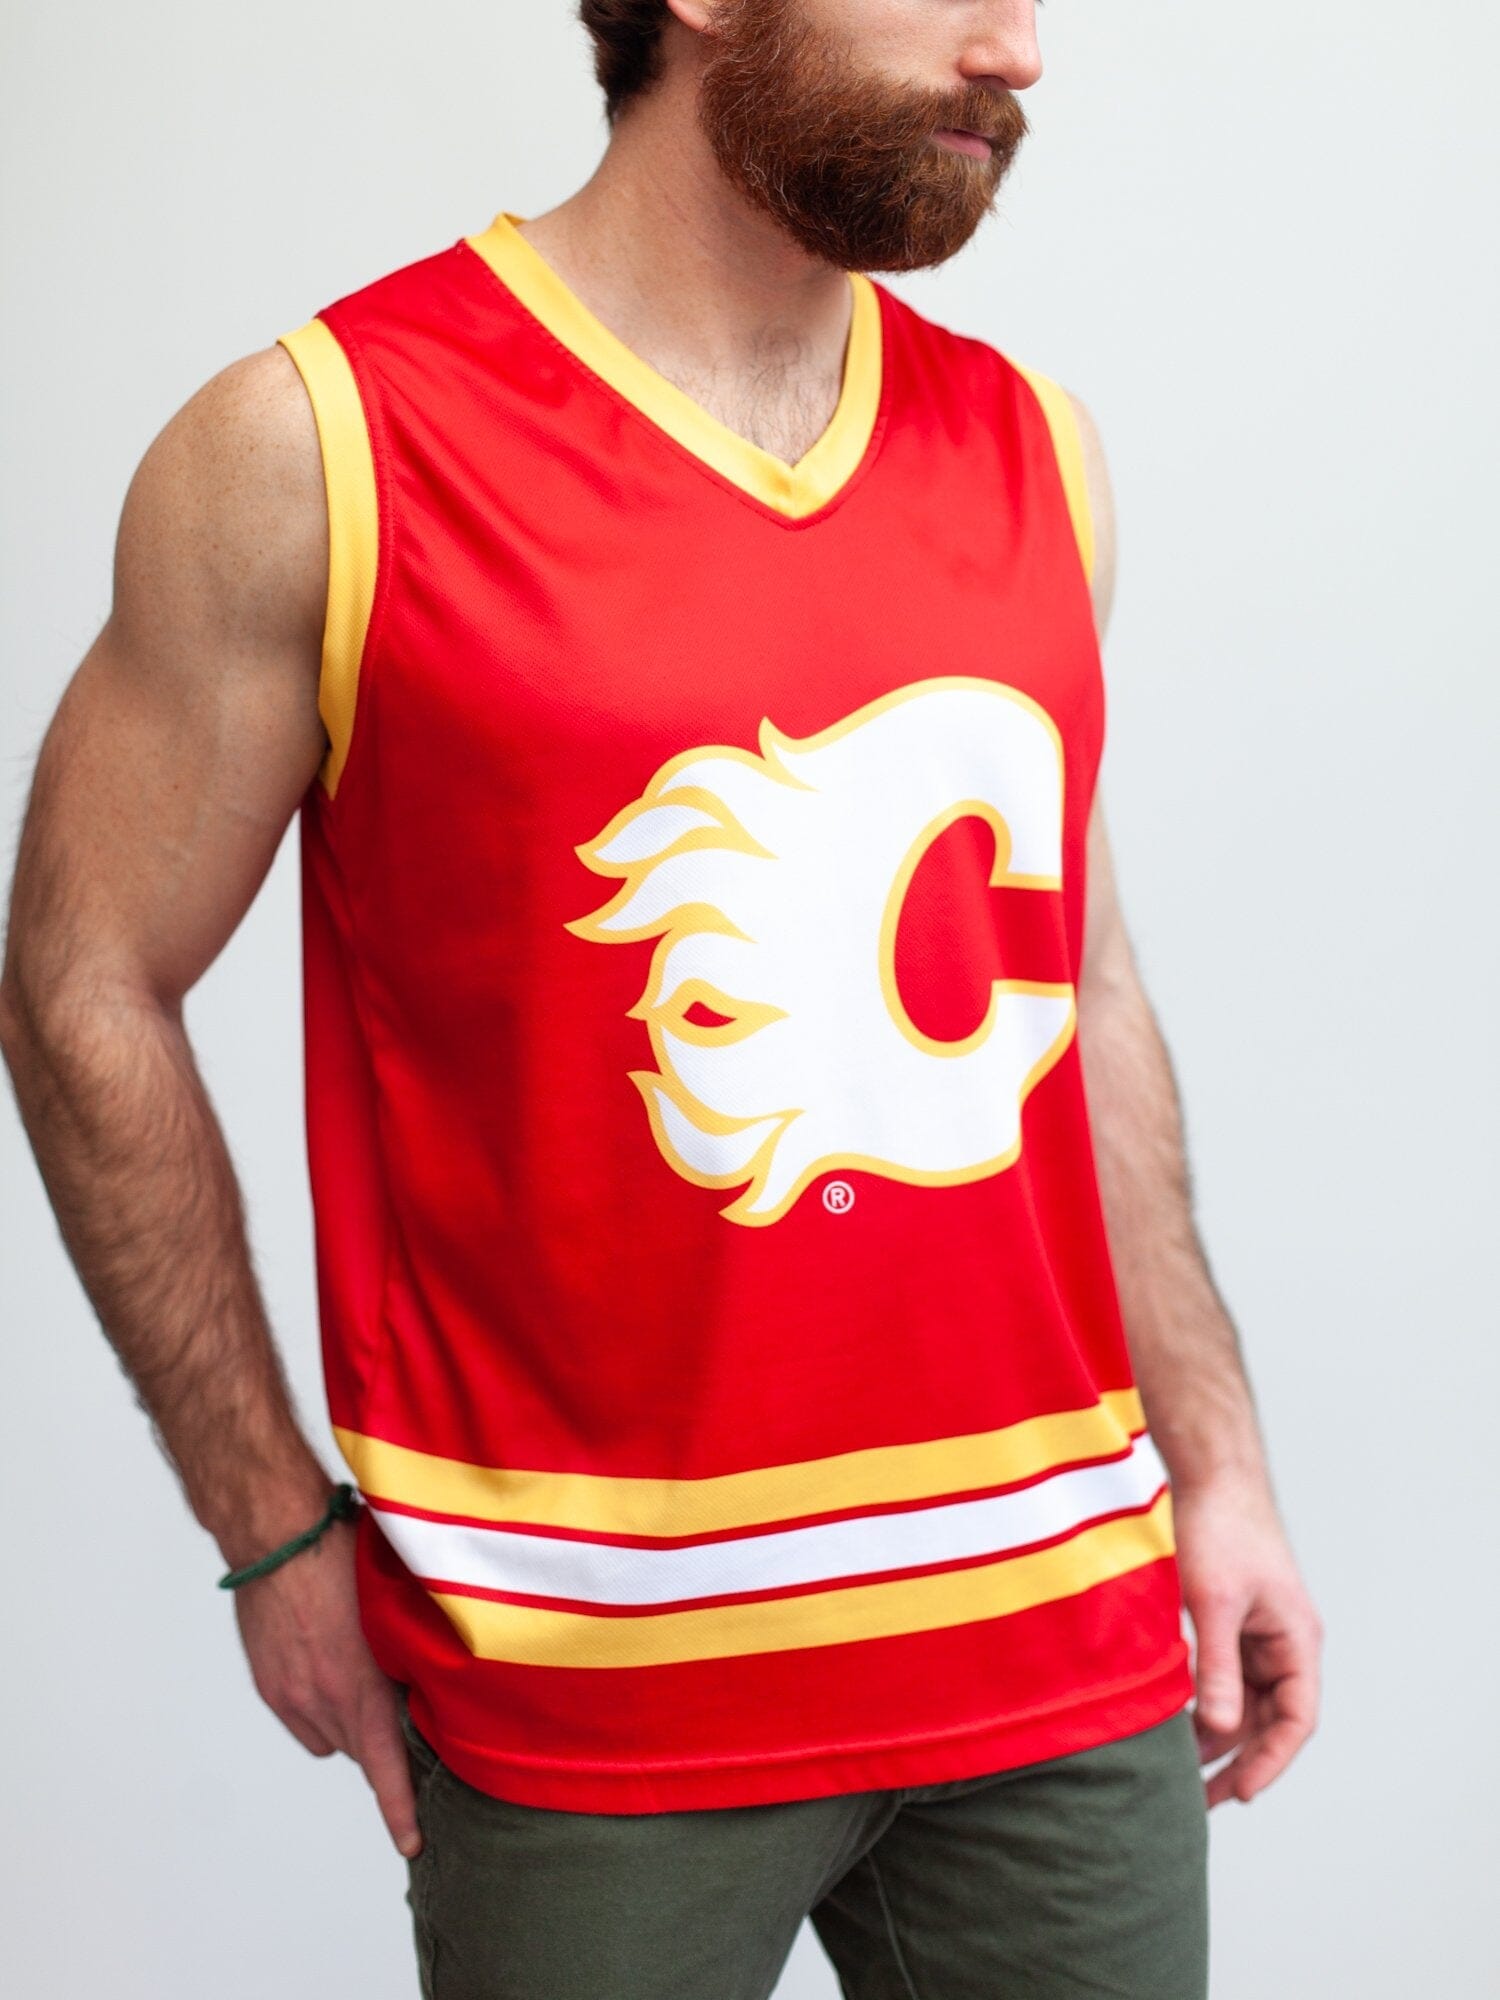 calgary flames alternate jersey